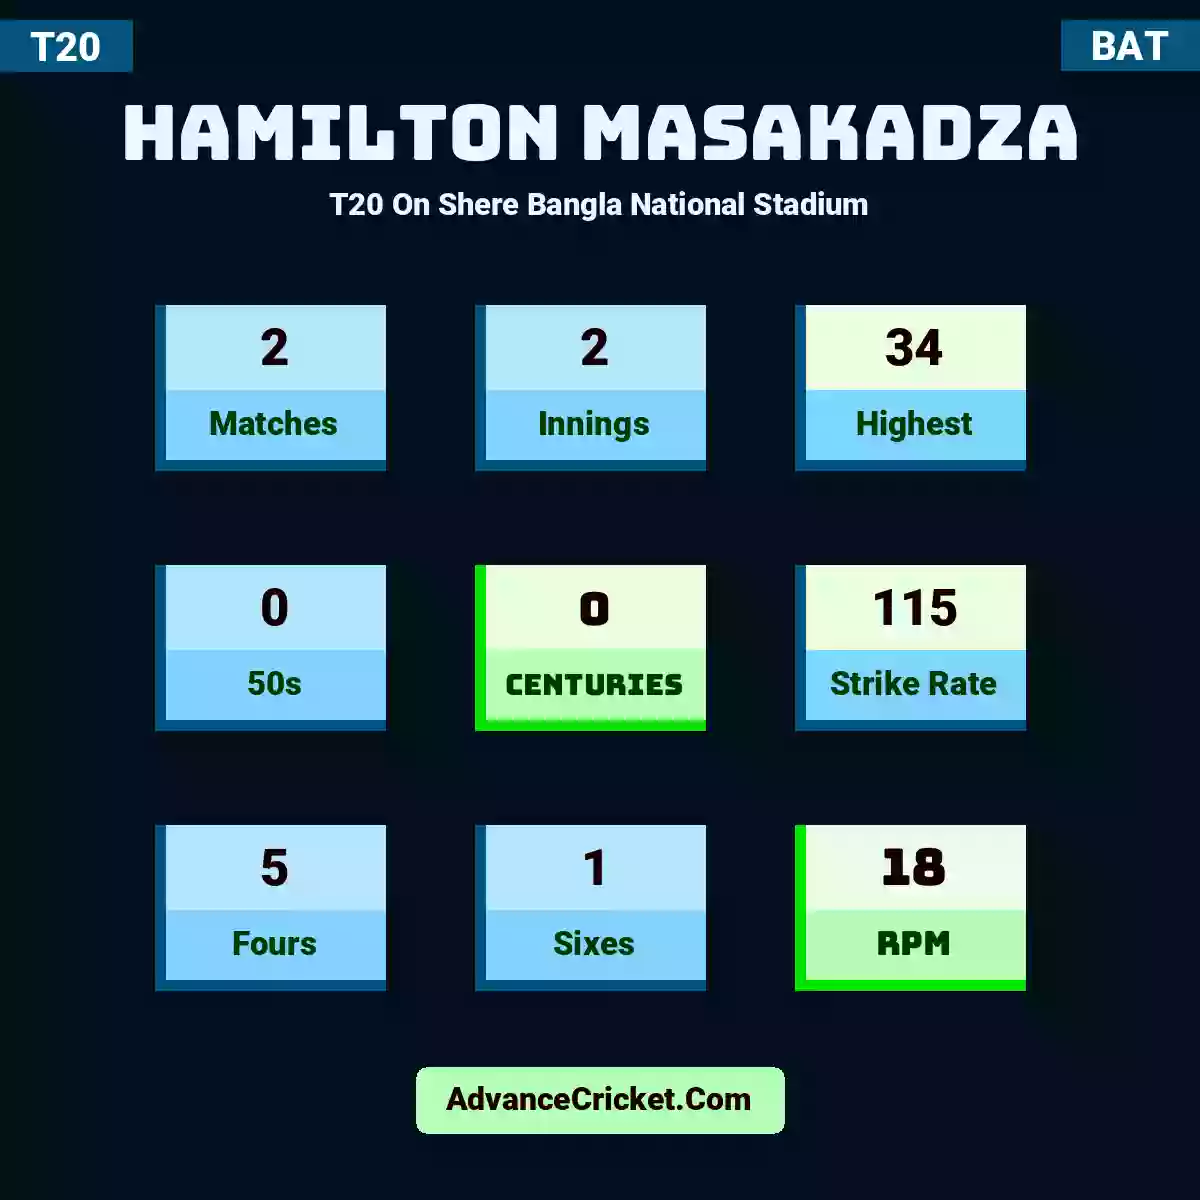 Hamilton Masakadza T20  On Shere Bangla National Stadium, Hamilton Masakadza played 2 matches, scored 34 runs as highest, 0 half-centuries, and 0 centuries, with a strike rate of 115. H.Masakadza hit 5 fours and 1 sixes, with an RPM of 18.